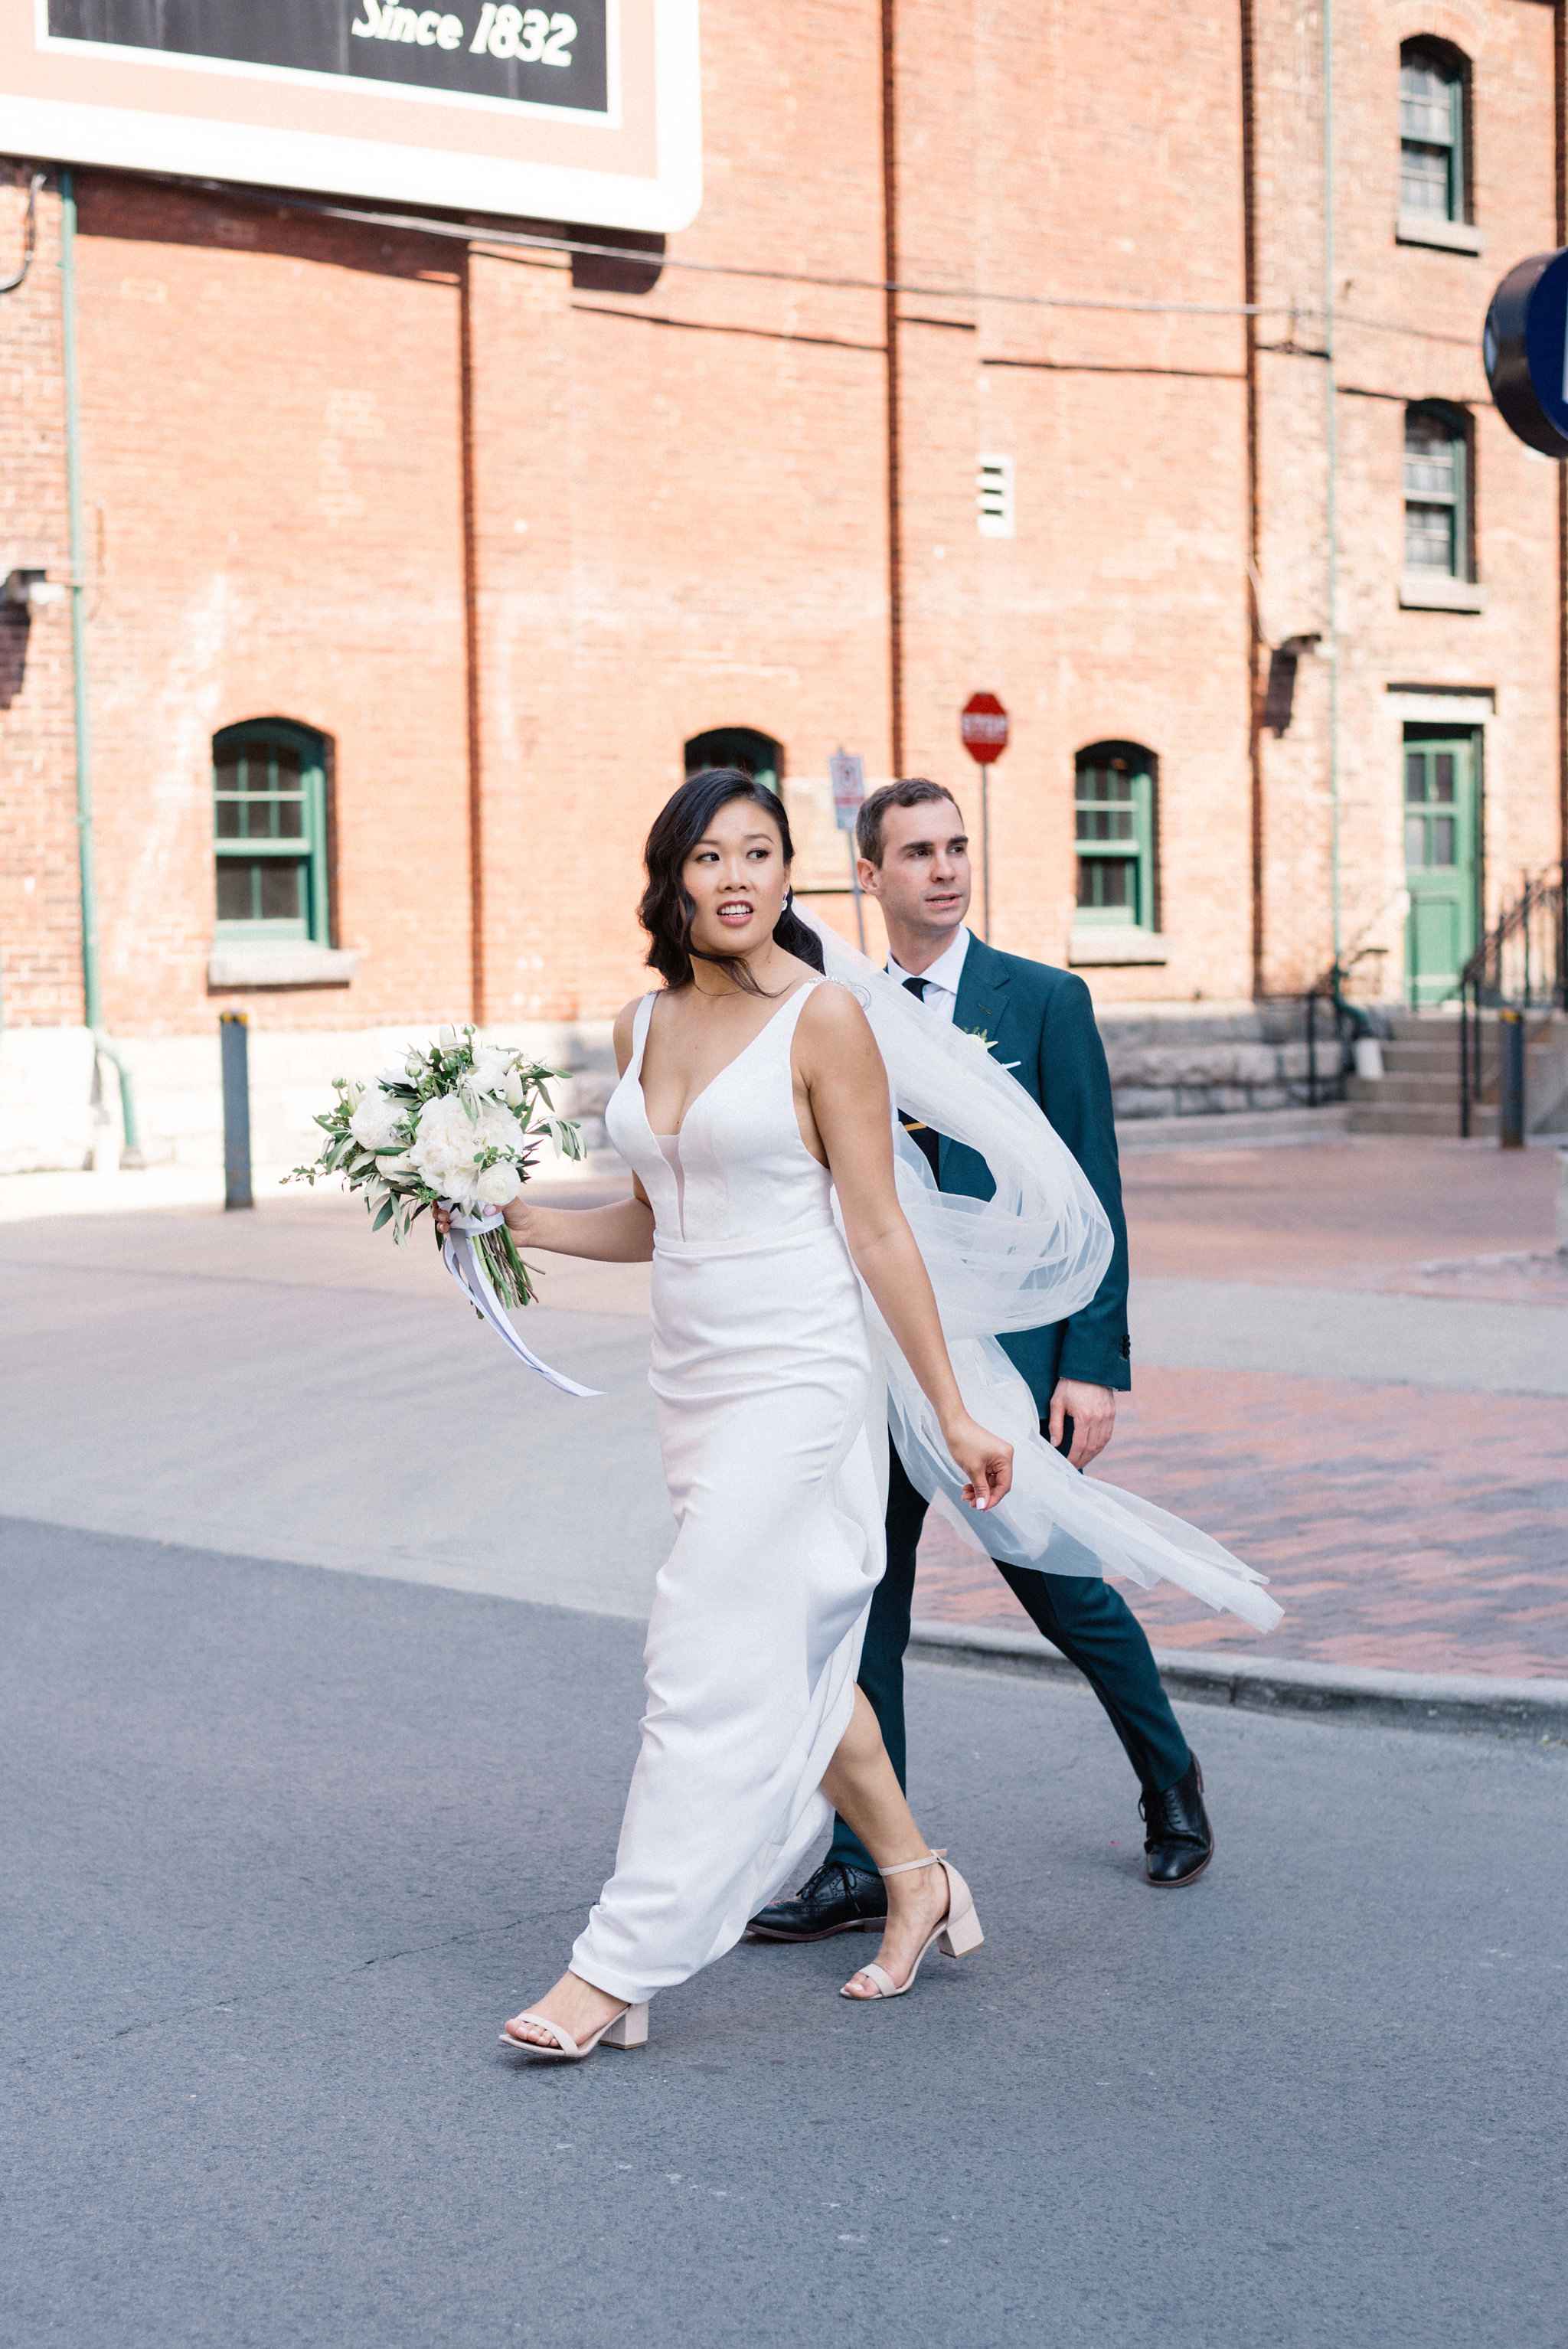 Distillery District Wedding - Olive Photography - Toronto wedding photographer